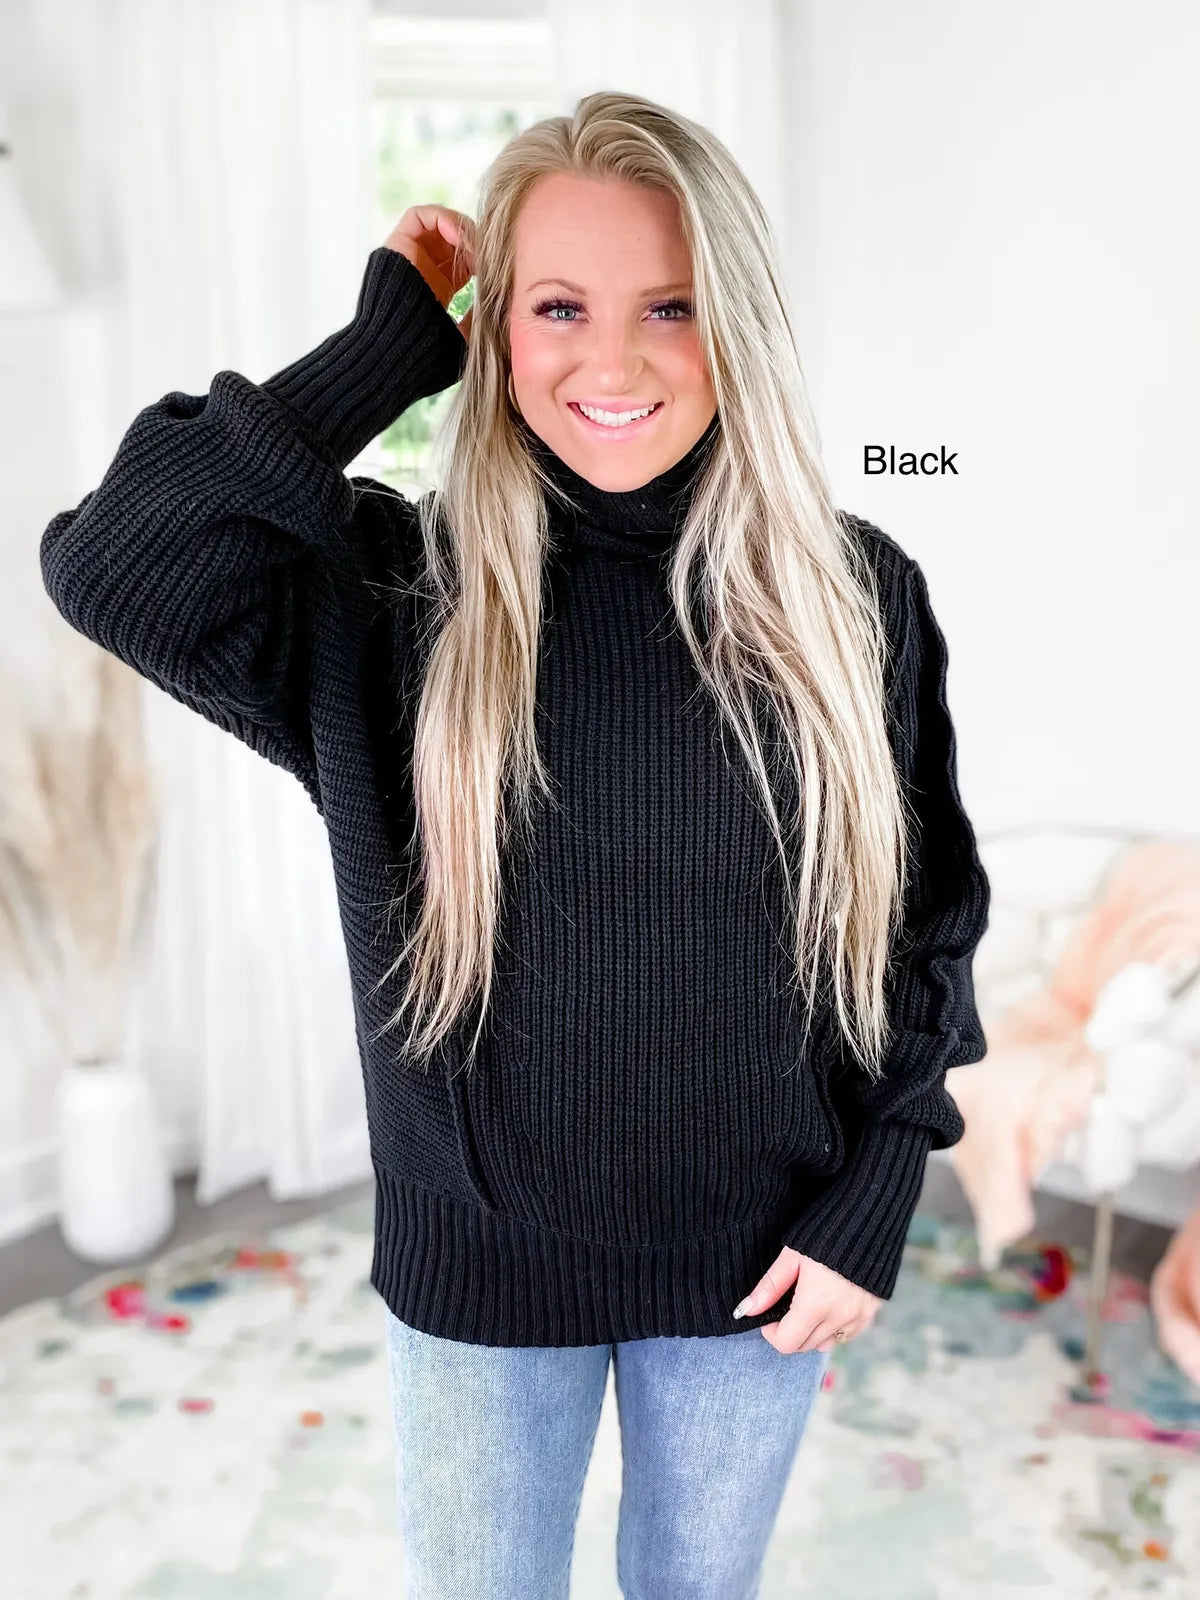 Oversized Turtle Neck Sweater Black